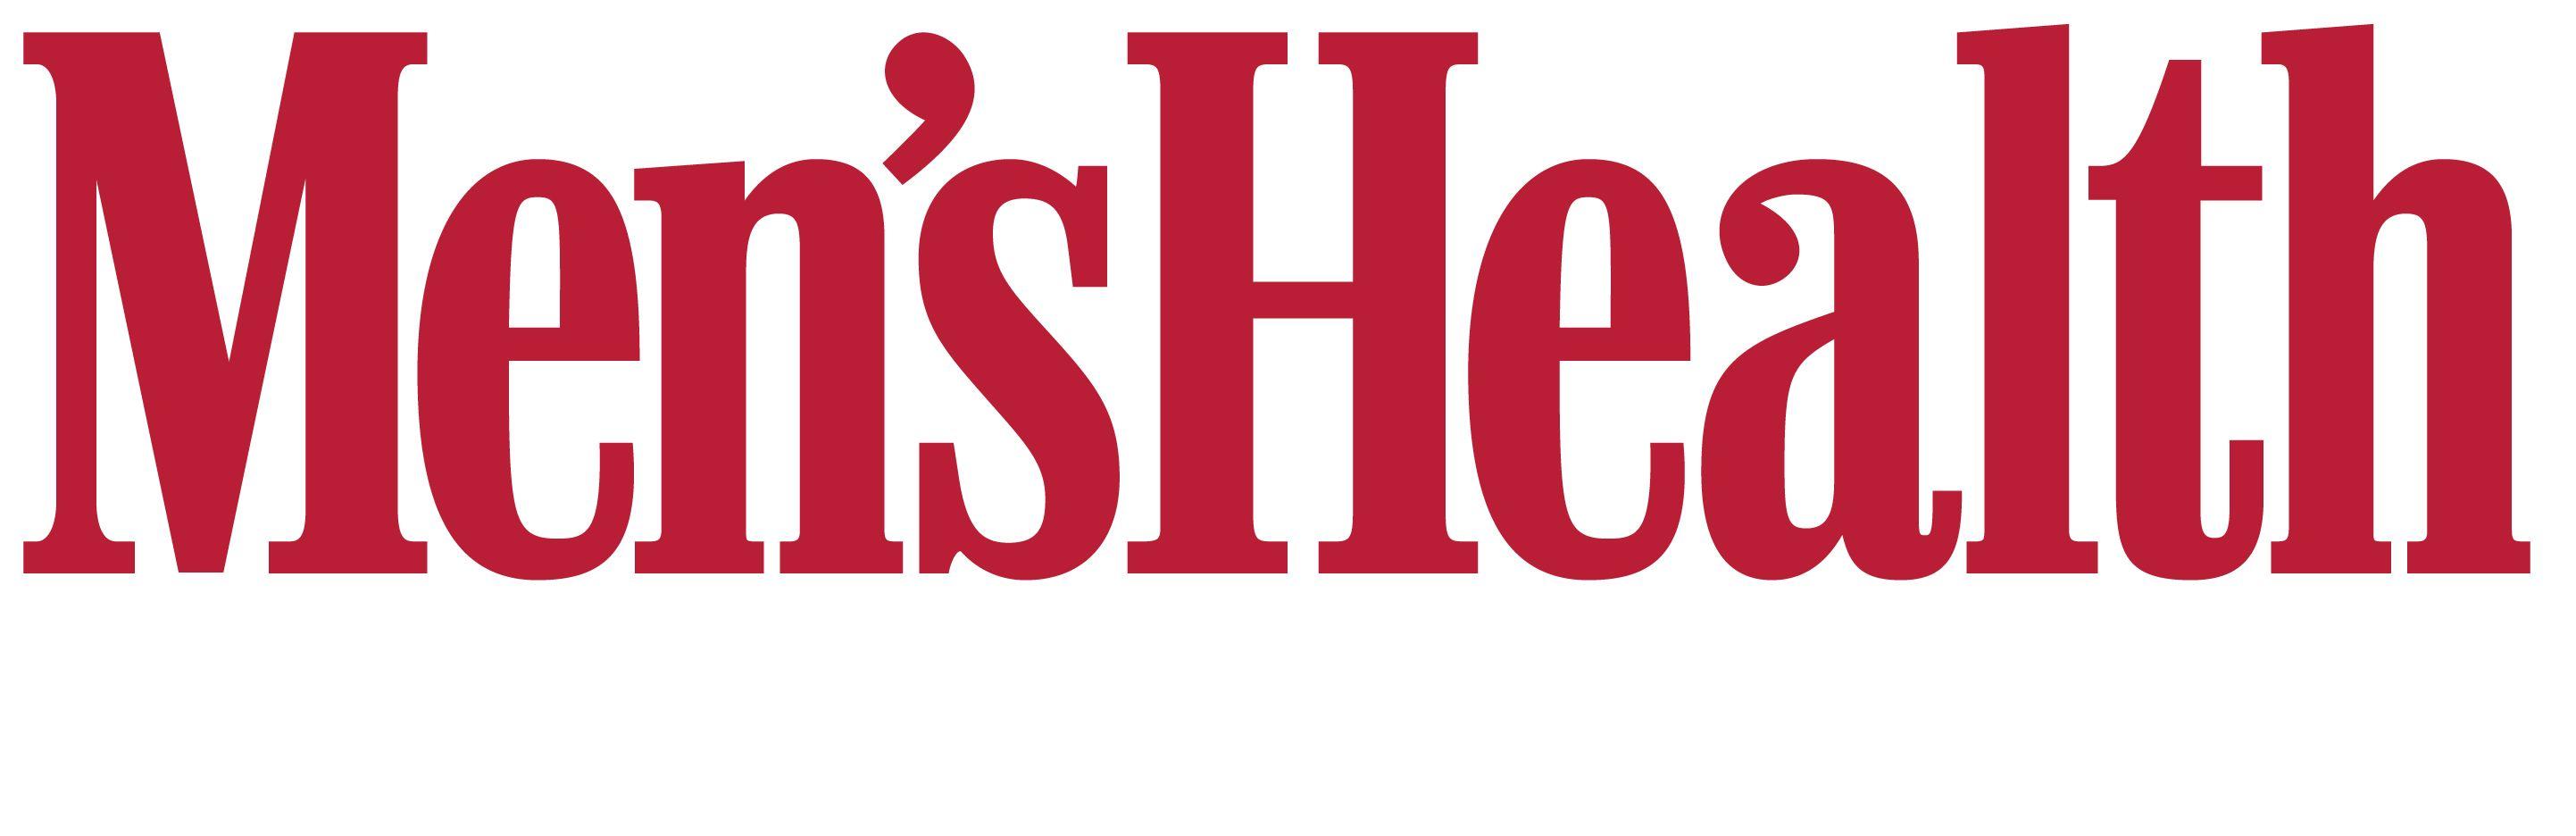 Men's Health Logo - mens-health-logo - The Awakened Lifestyle